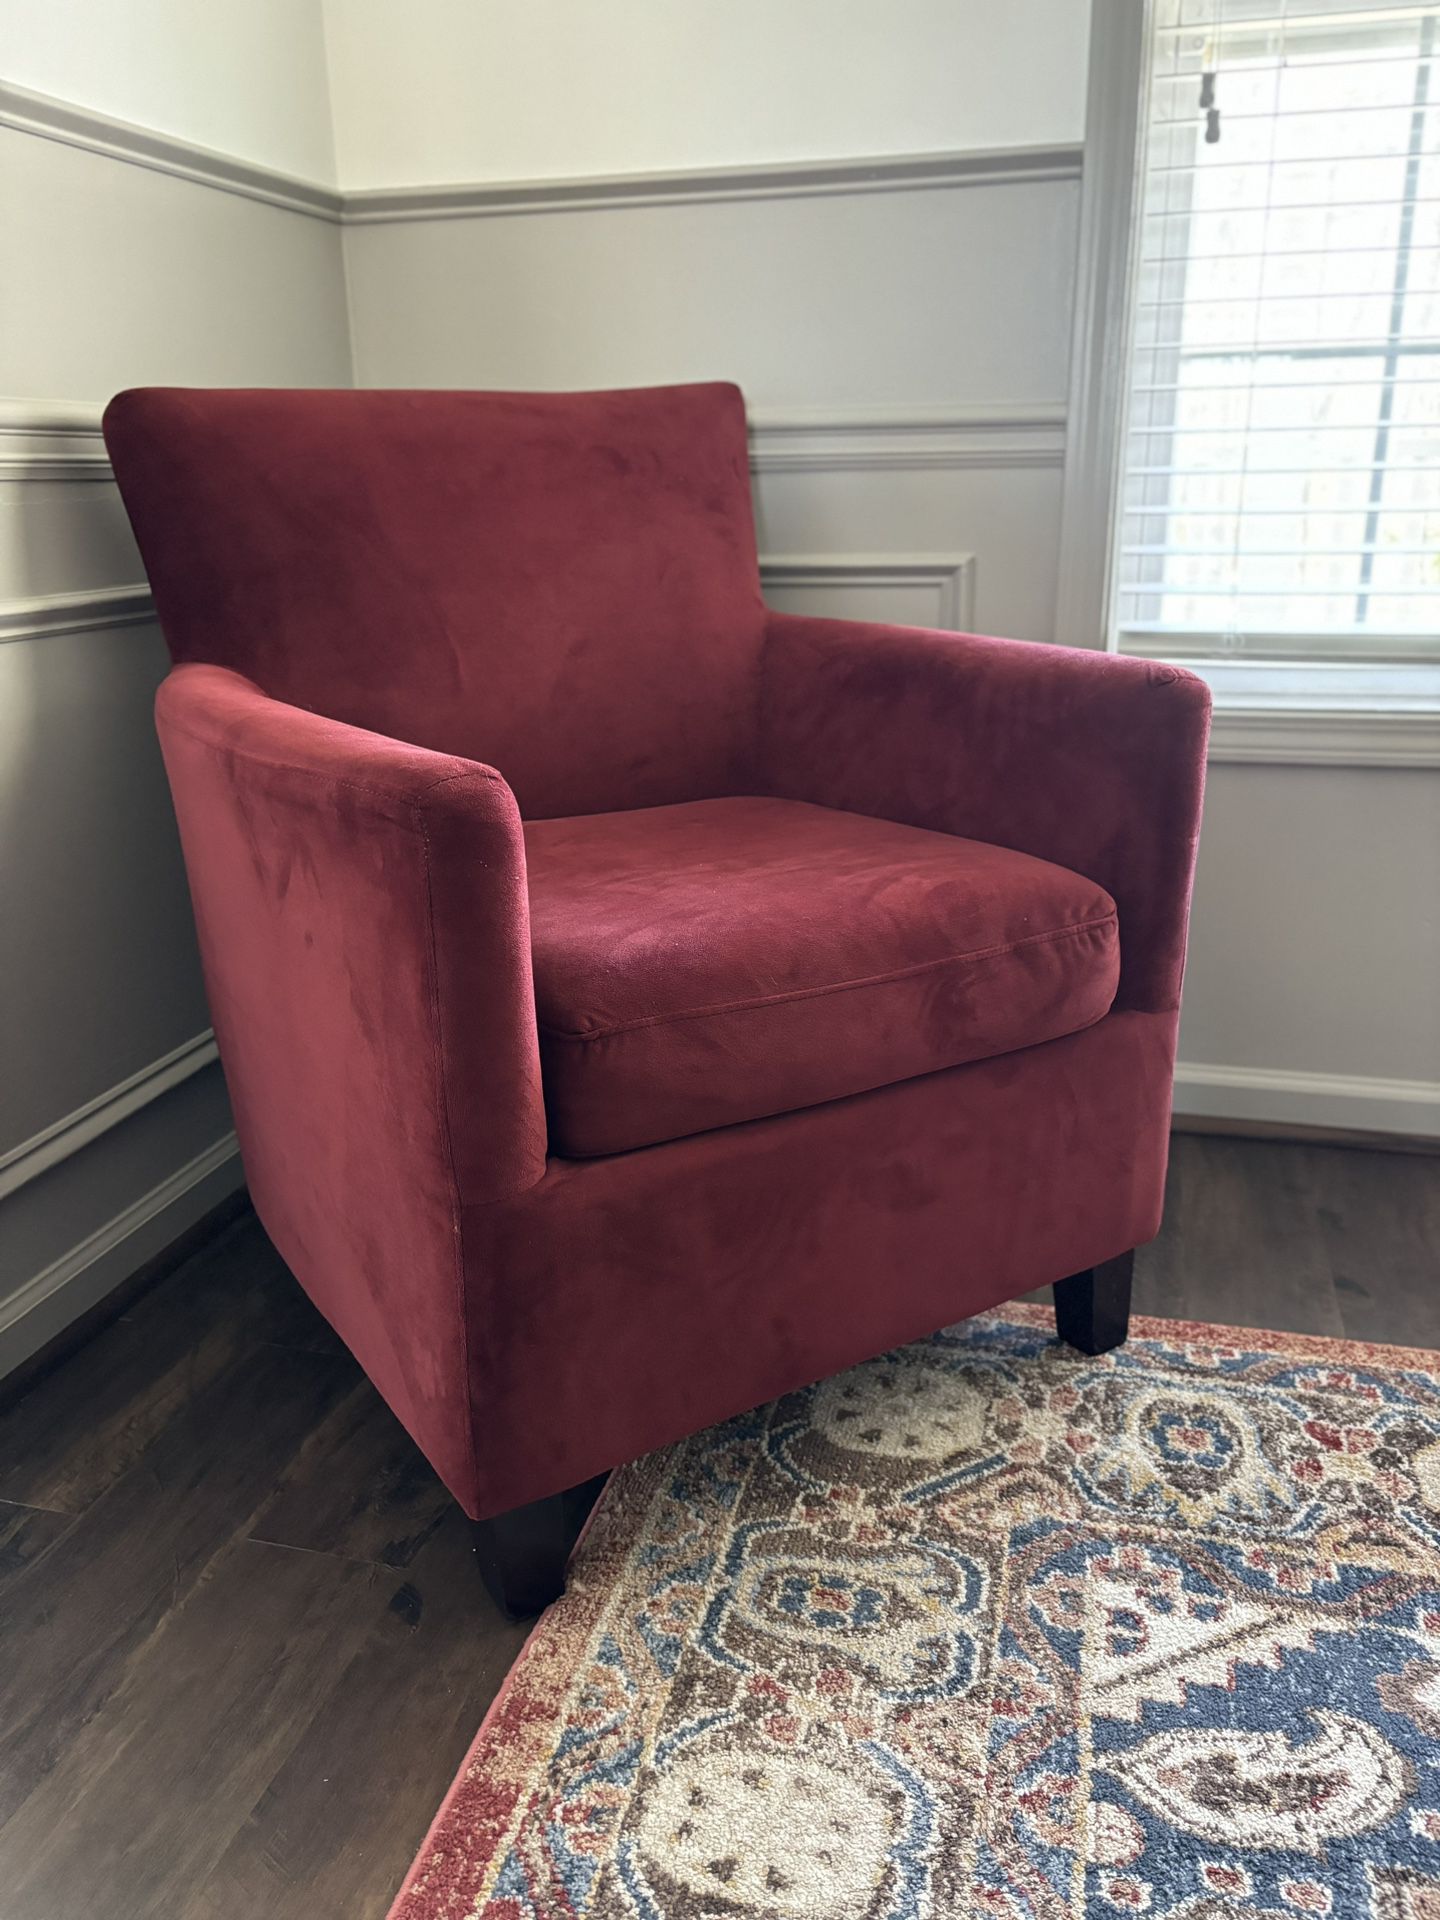 Beautiful Burgundy Red Arm Chair